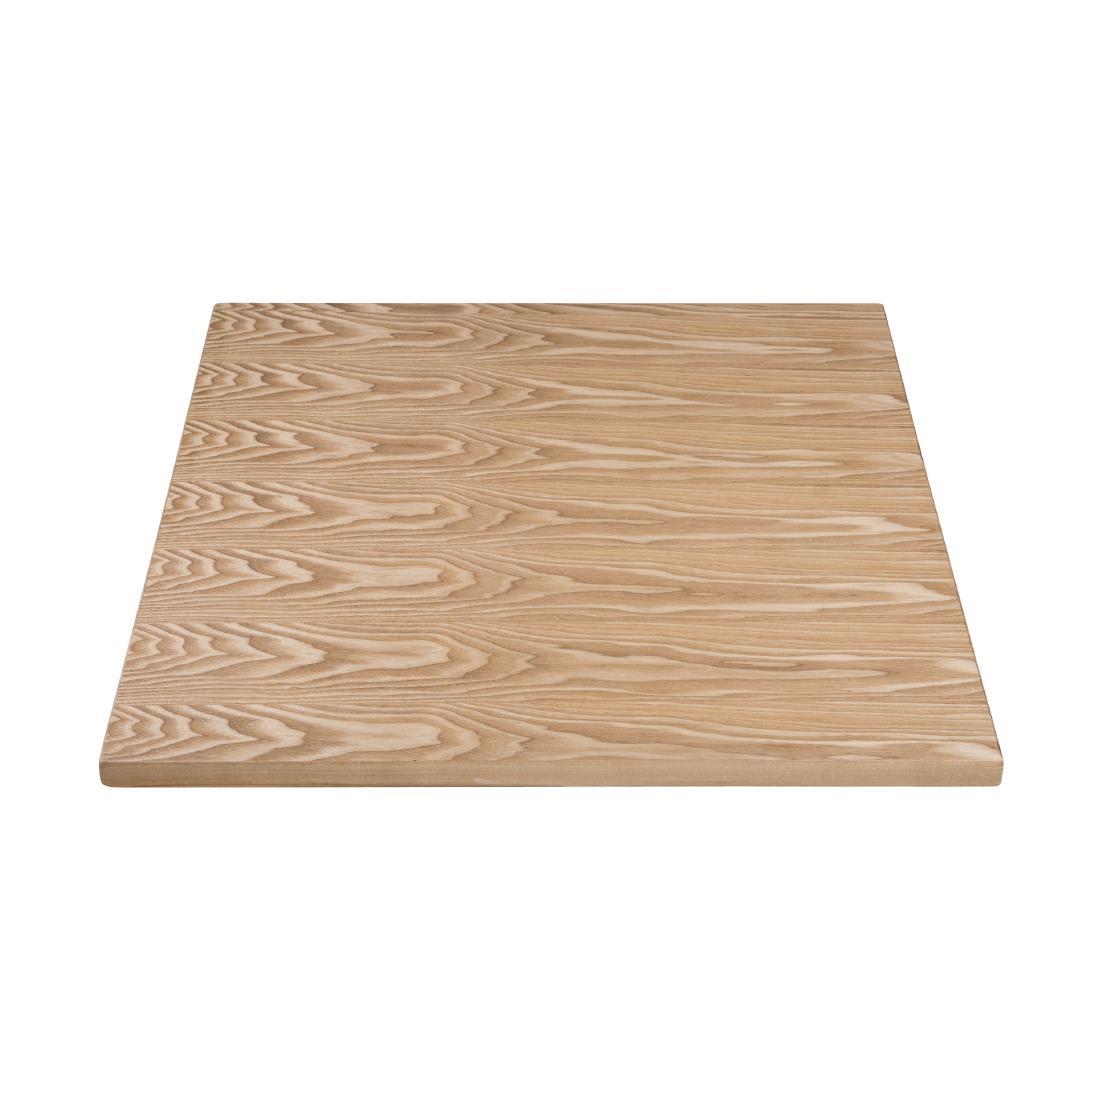 Bolero Pre-drilled Square Table Top Natural Ash Veneer 700mm - DY717  - 2